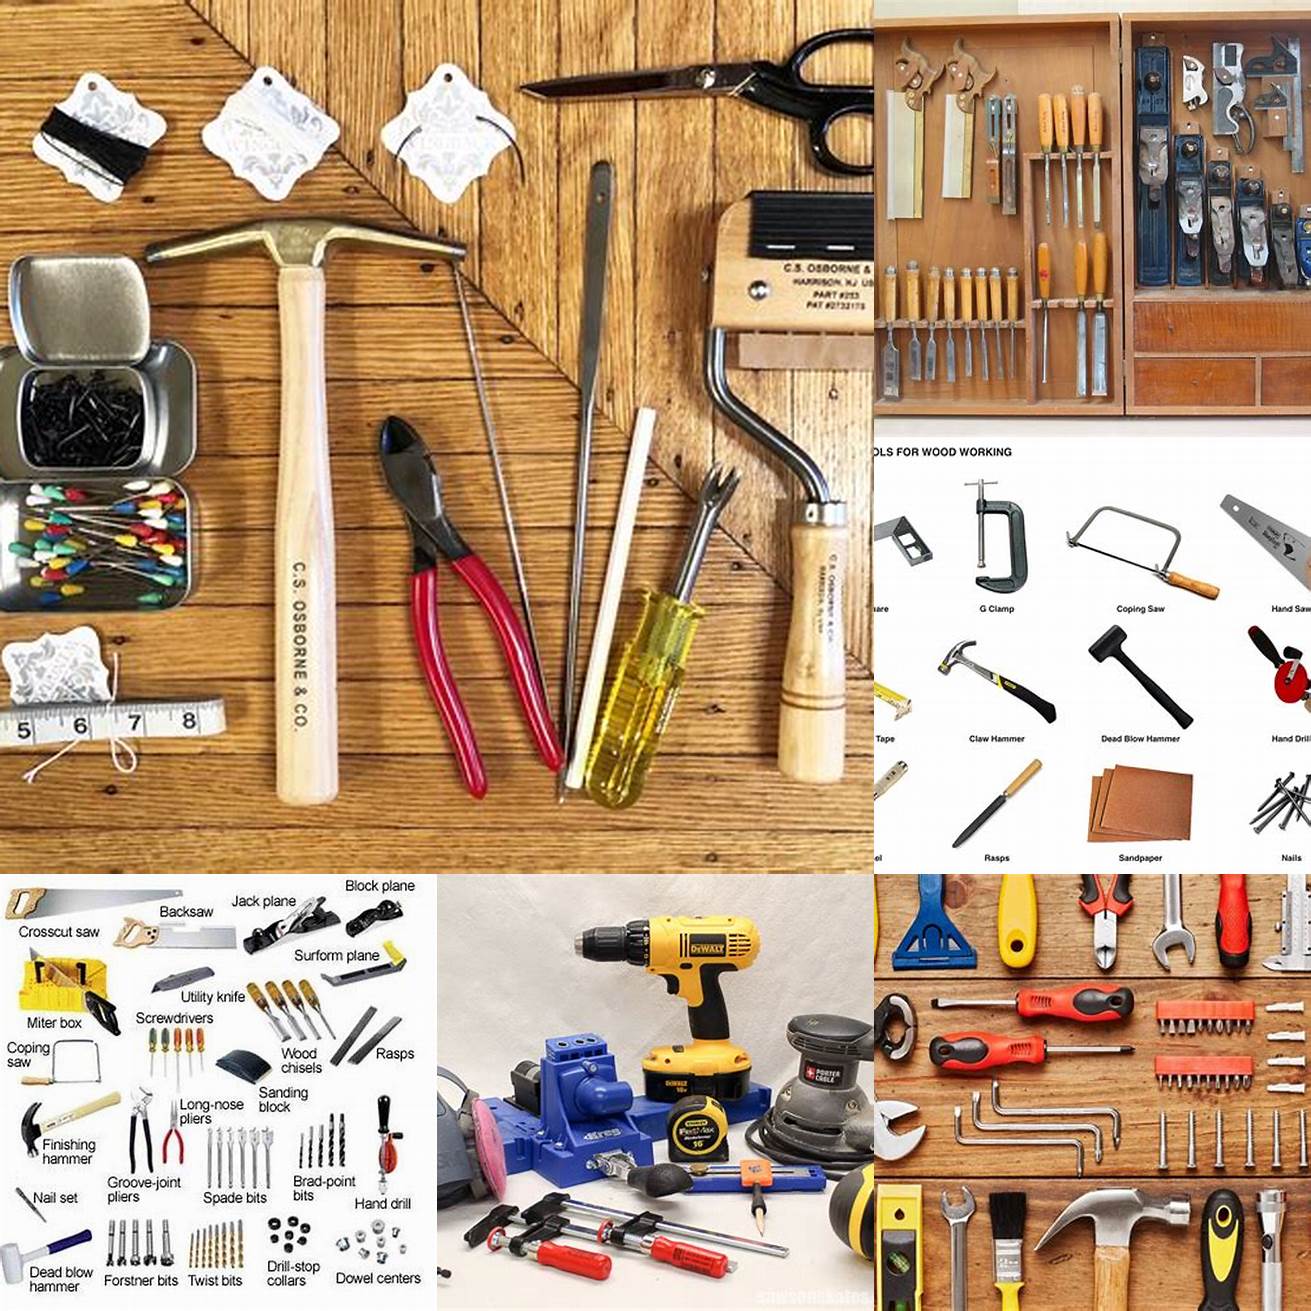 Materials and Tools